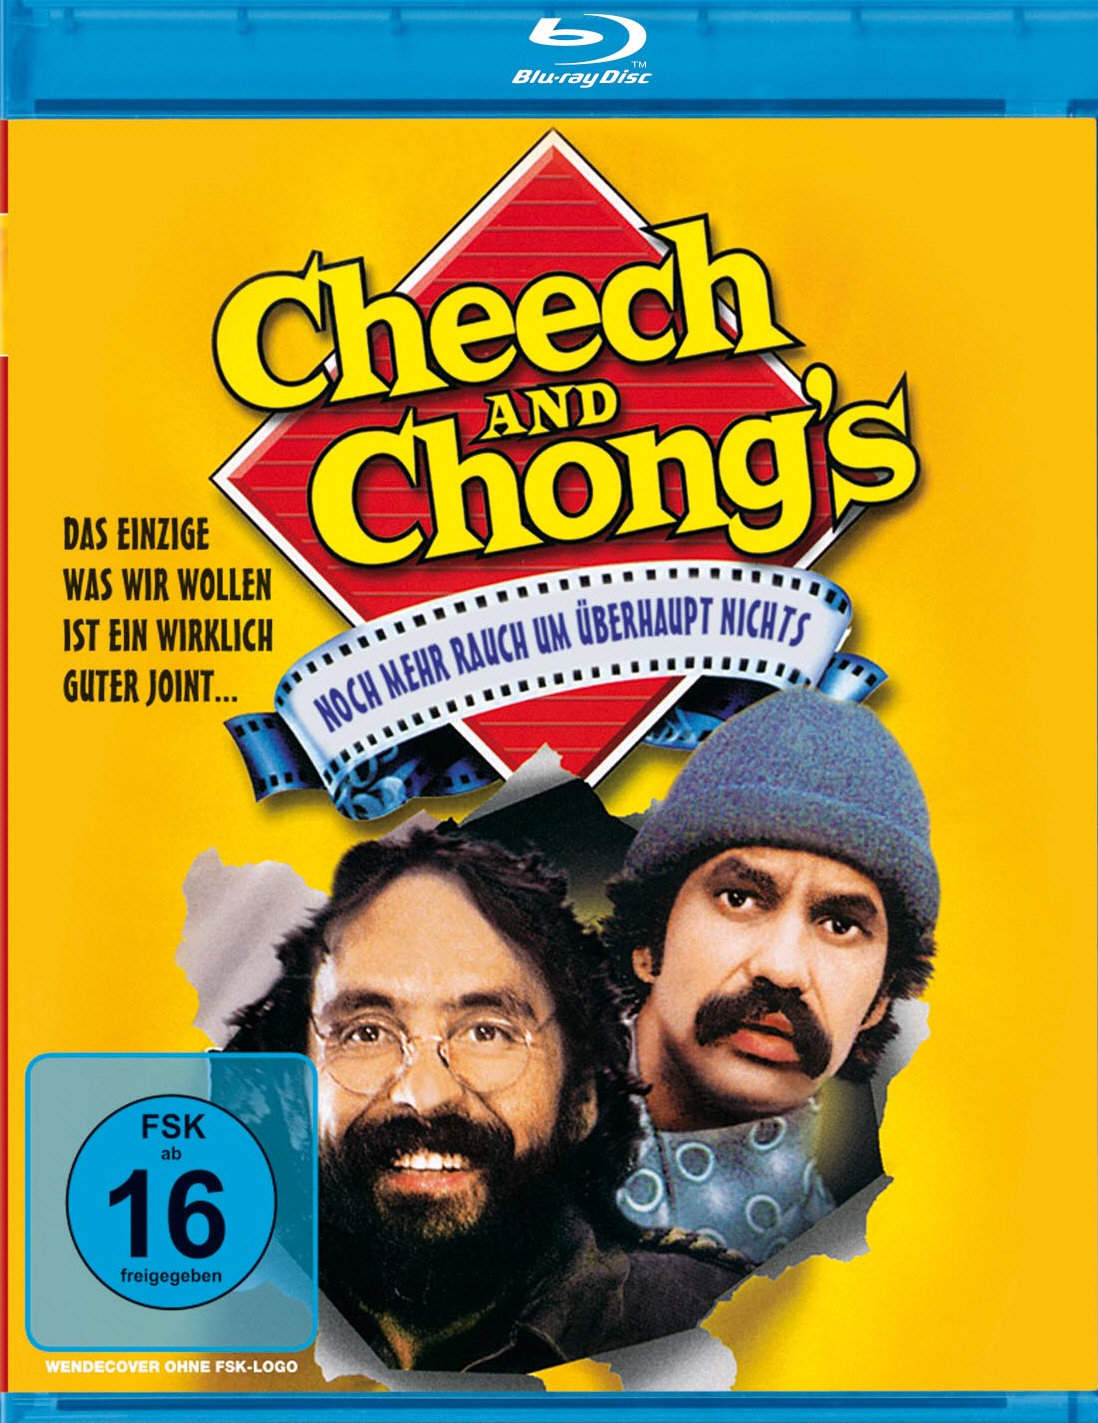 Cheech and chong make their film debut... 